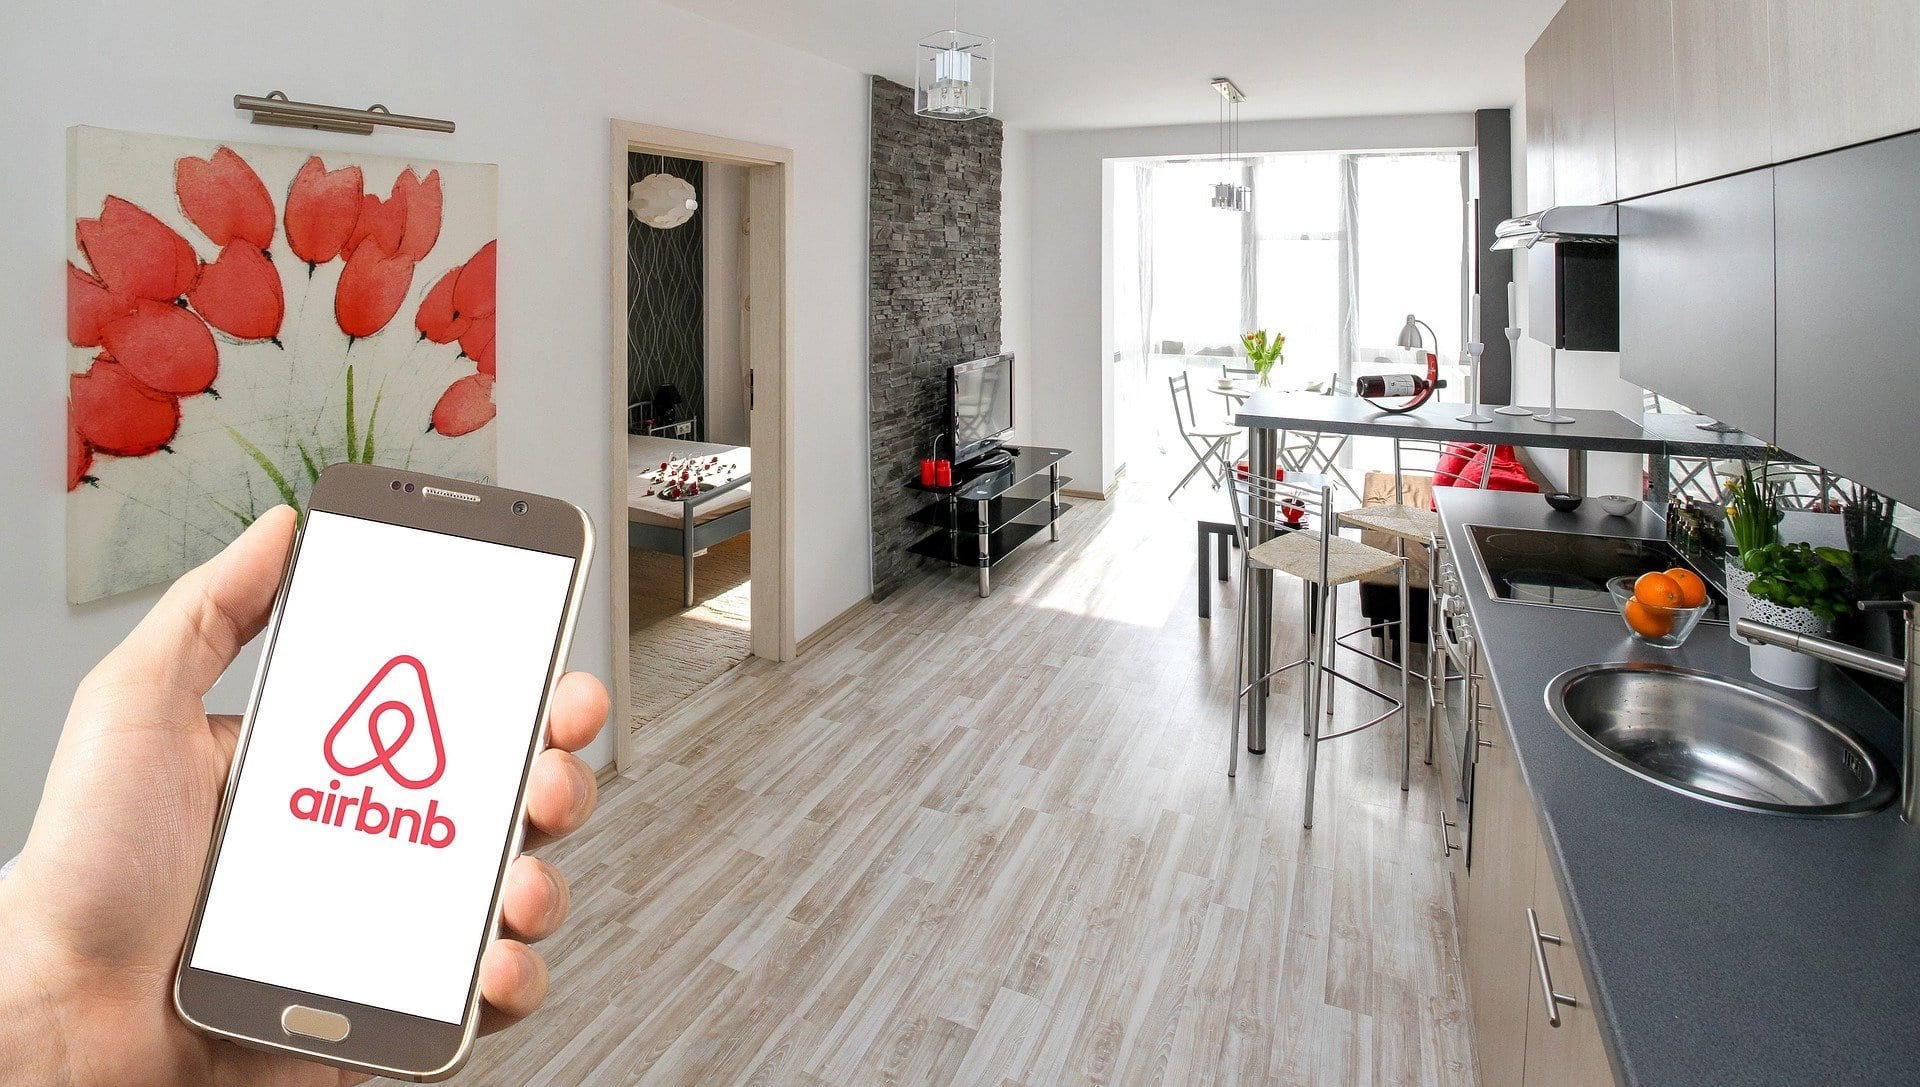 airbnb app on phone